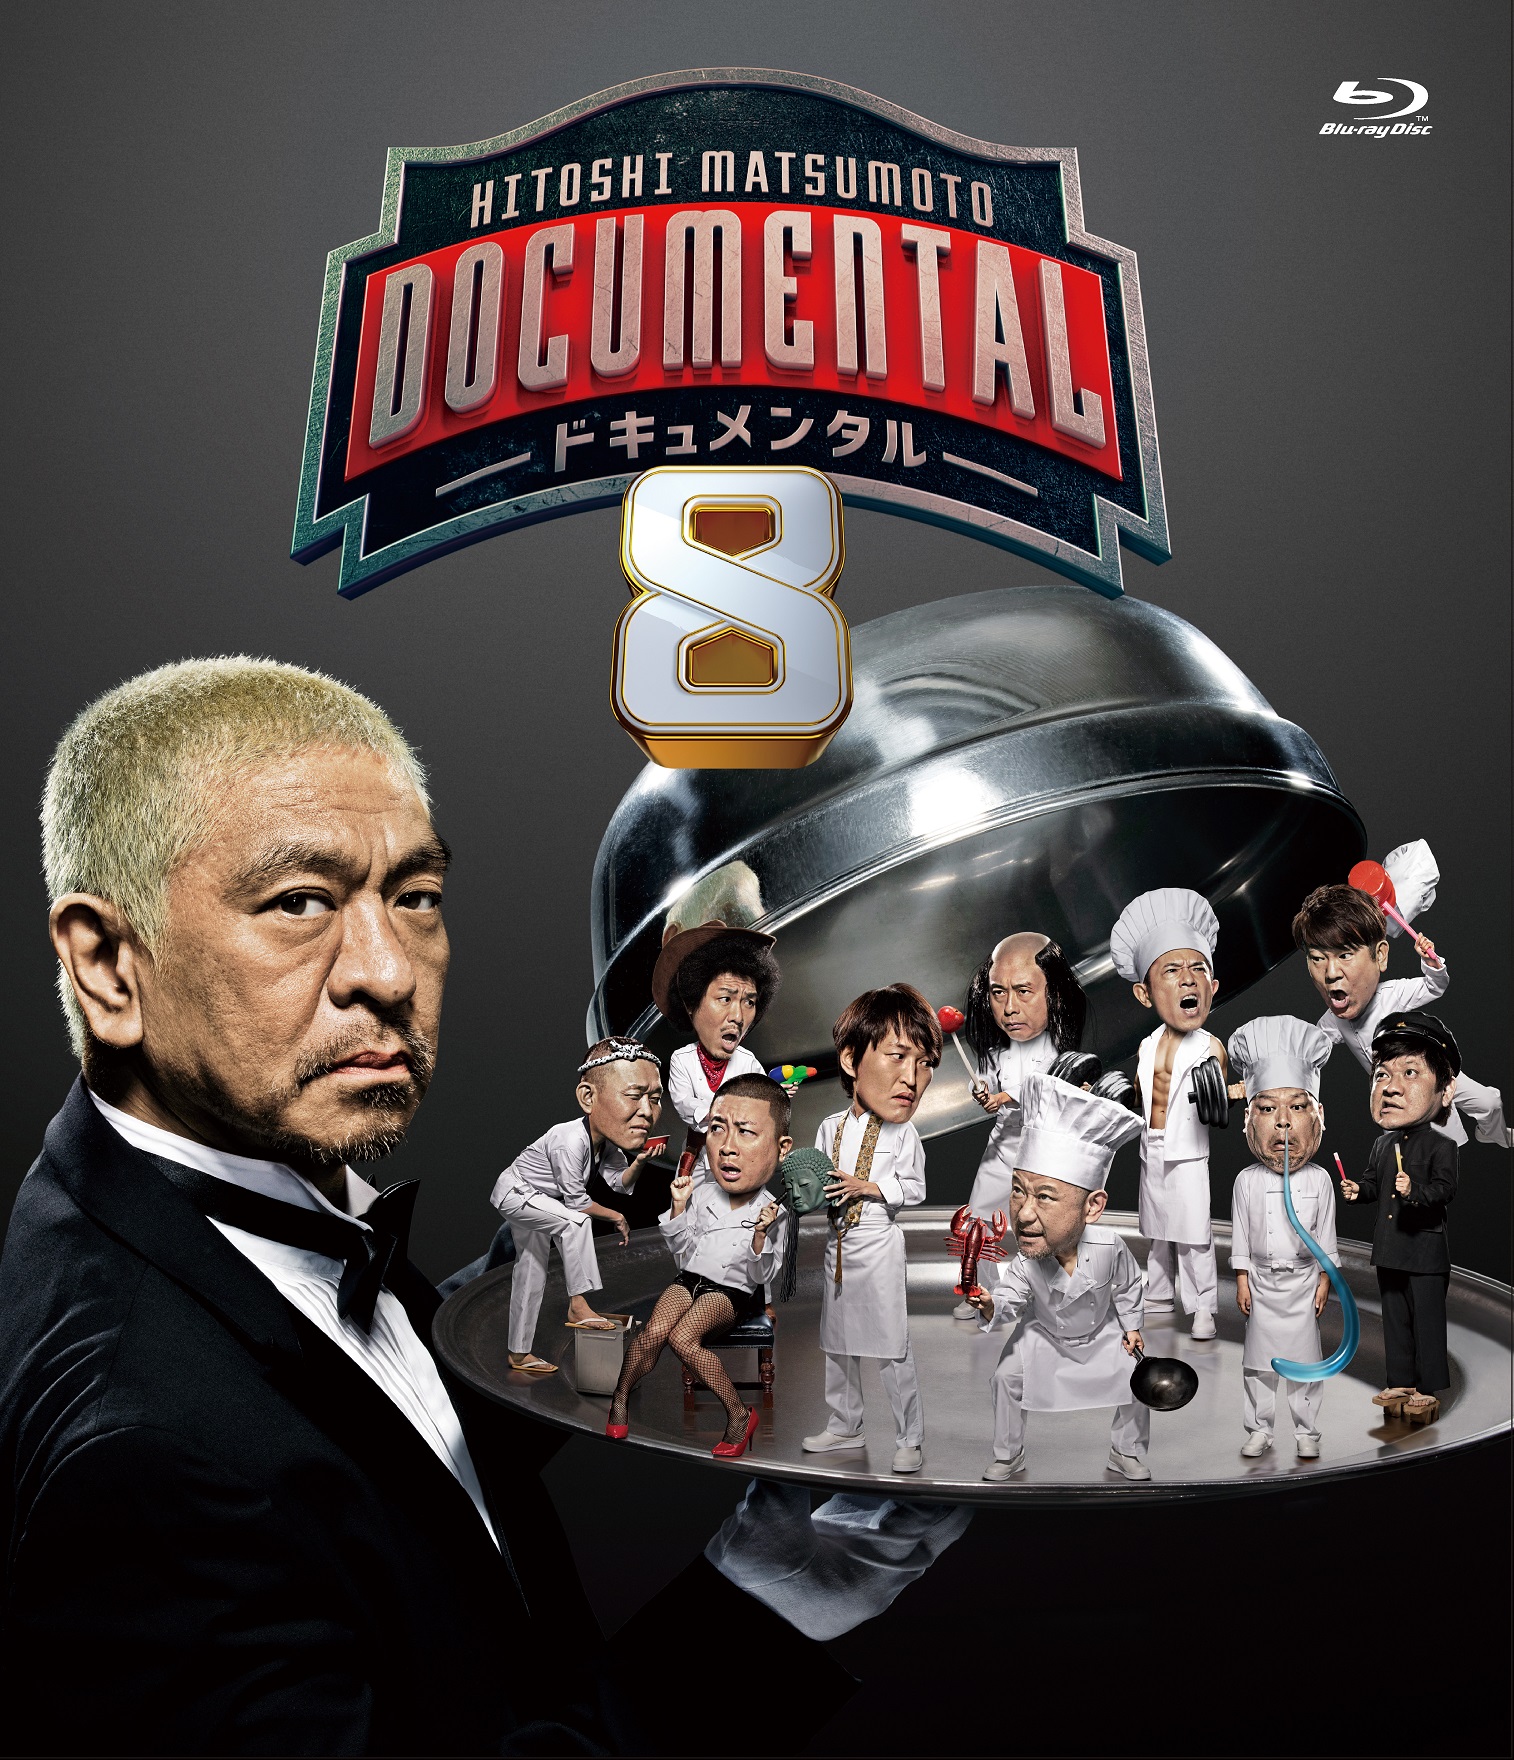 Hitoshi Matsumoto Presentsドキュメンタル シーズン 8 9 Dvd Blu Ray 9月14日発売決定 Fany Magazine